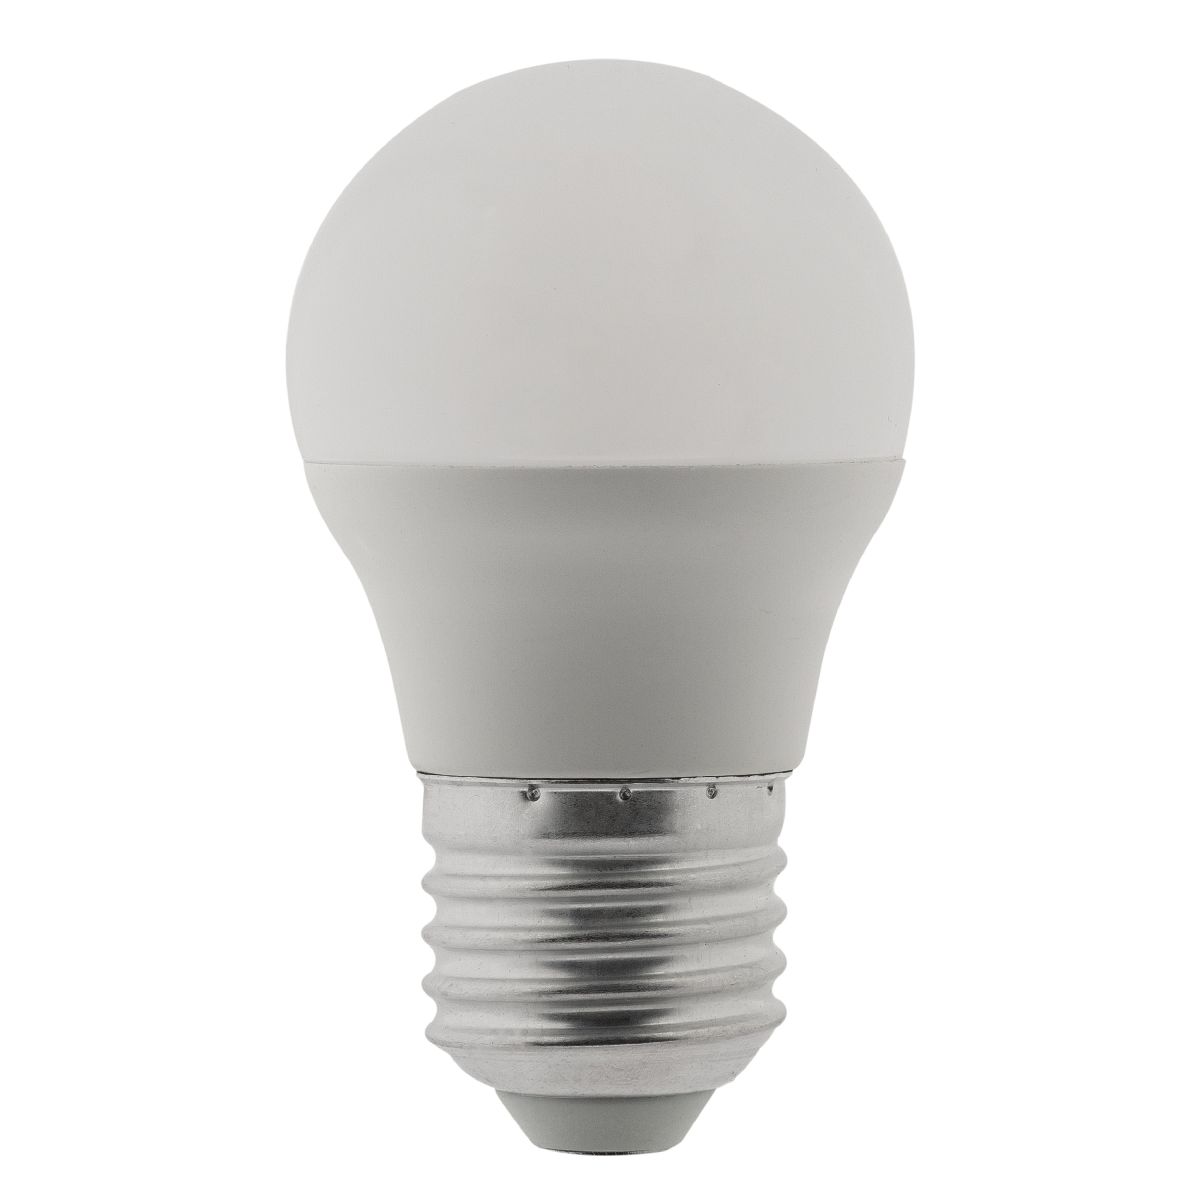 Лампа светодиодная Эра E27 10W 4000K LED P45-10W-840-E27 R Б0050234